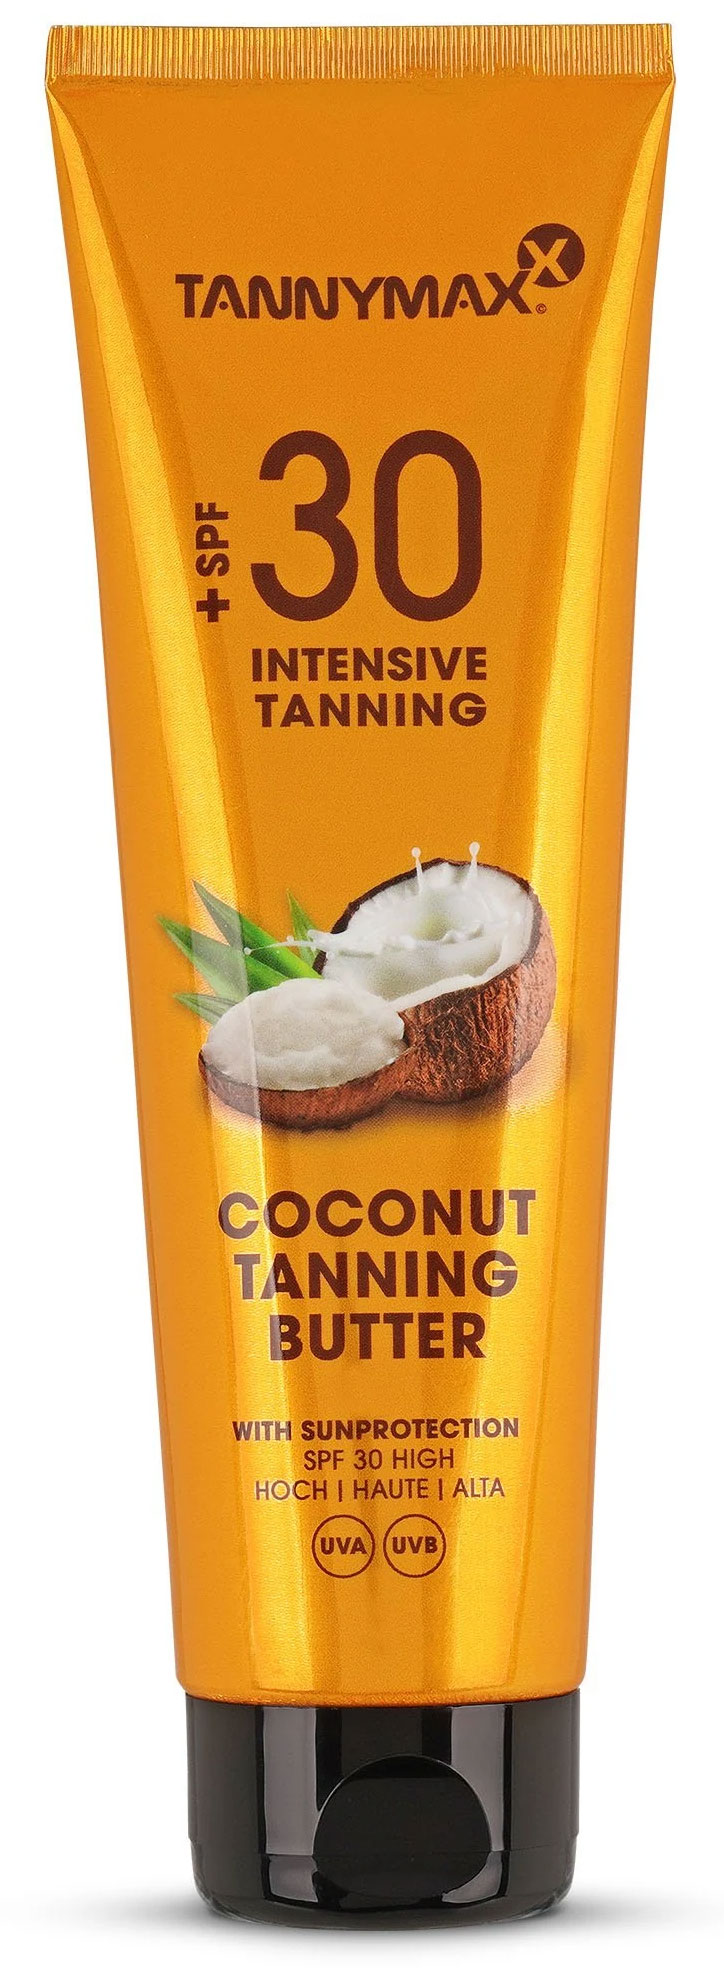 Tannymaxx Coconut SPF 30 / LSF 30 Tanning Butter Reichhaltige Kokosnussbutter 2902010000